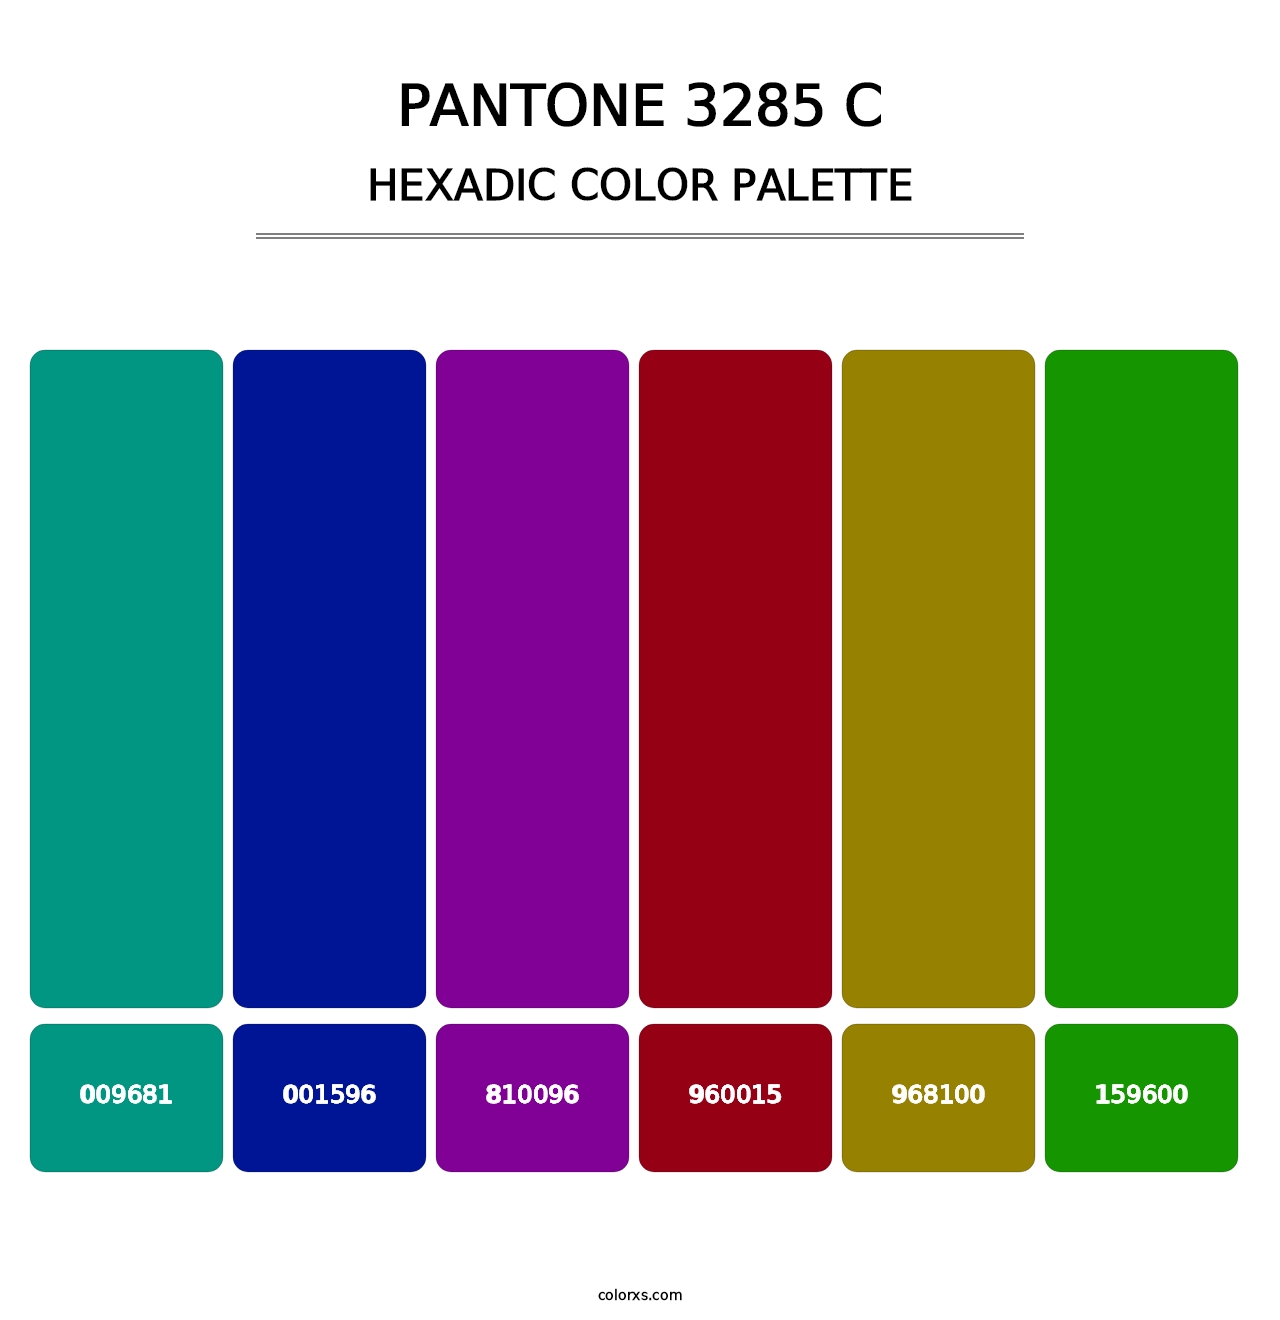 PANTONE 3285 C - Hexadic Color Palette